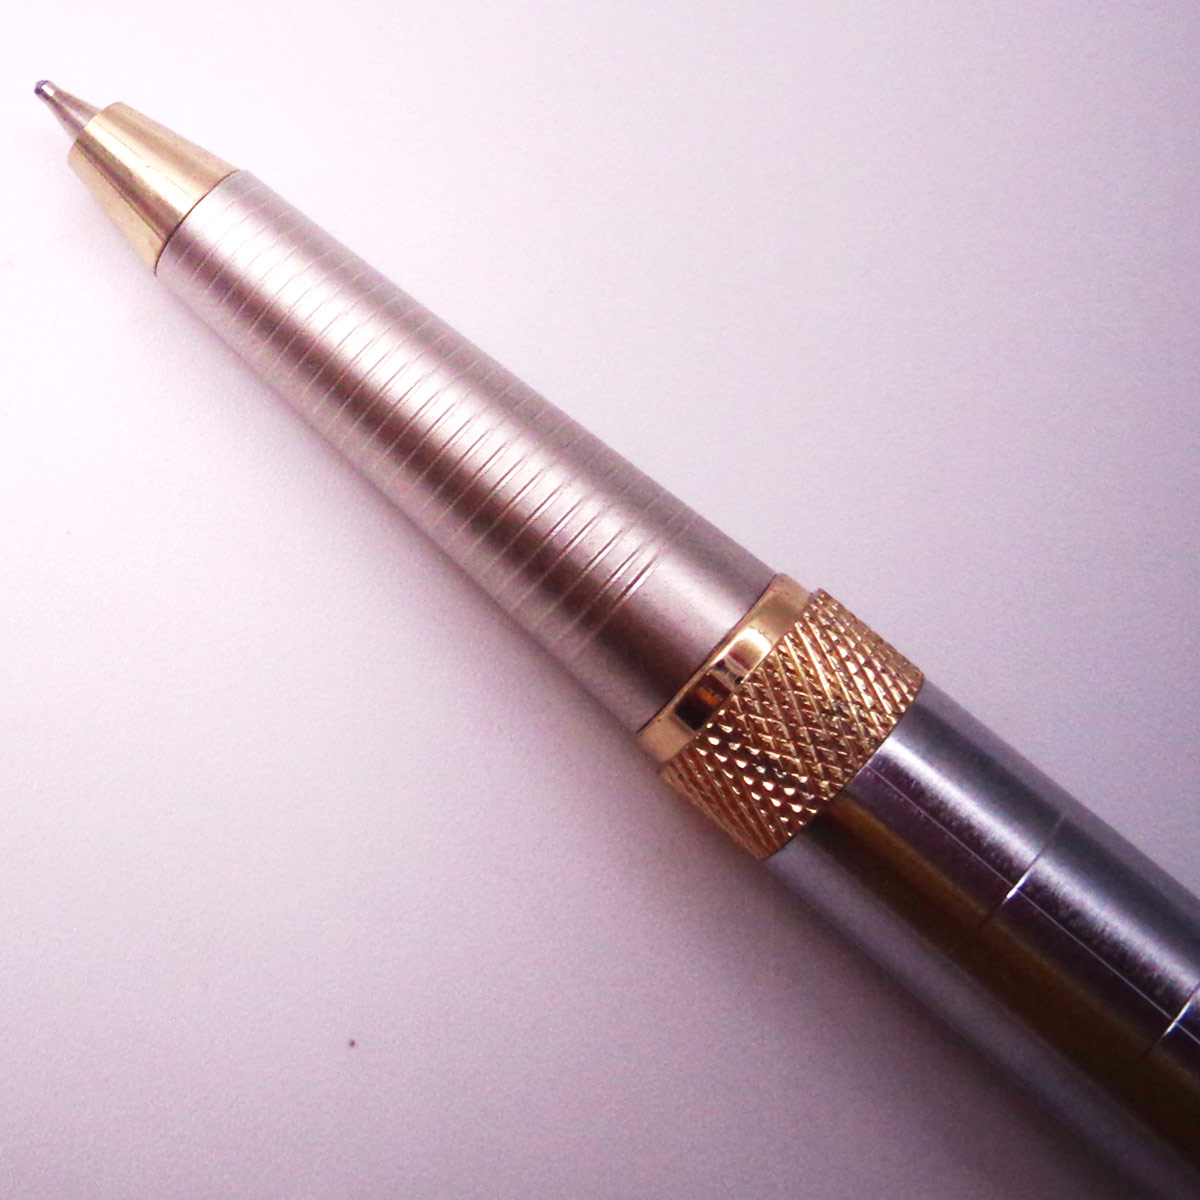 Penhose.in Short Silver Color Cap With Golden Clip And Trim Ball pen SKU 25002